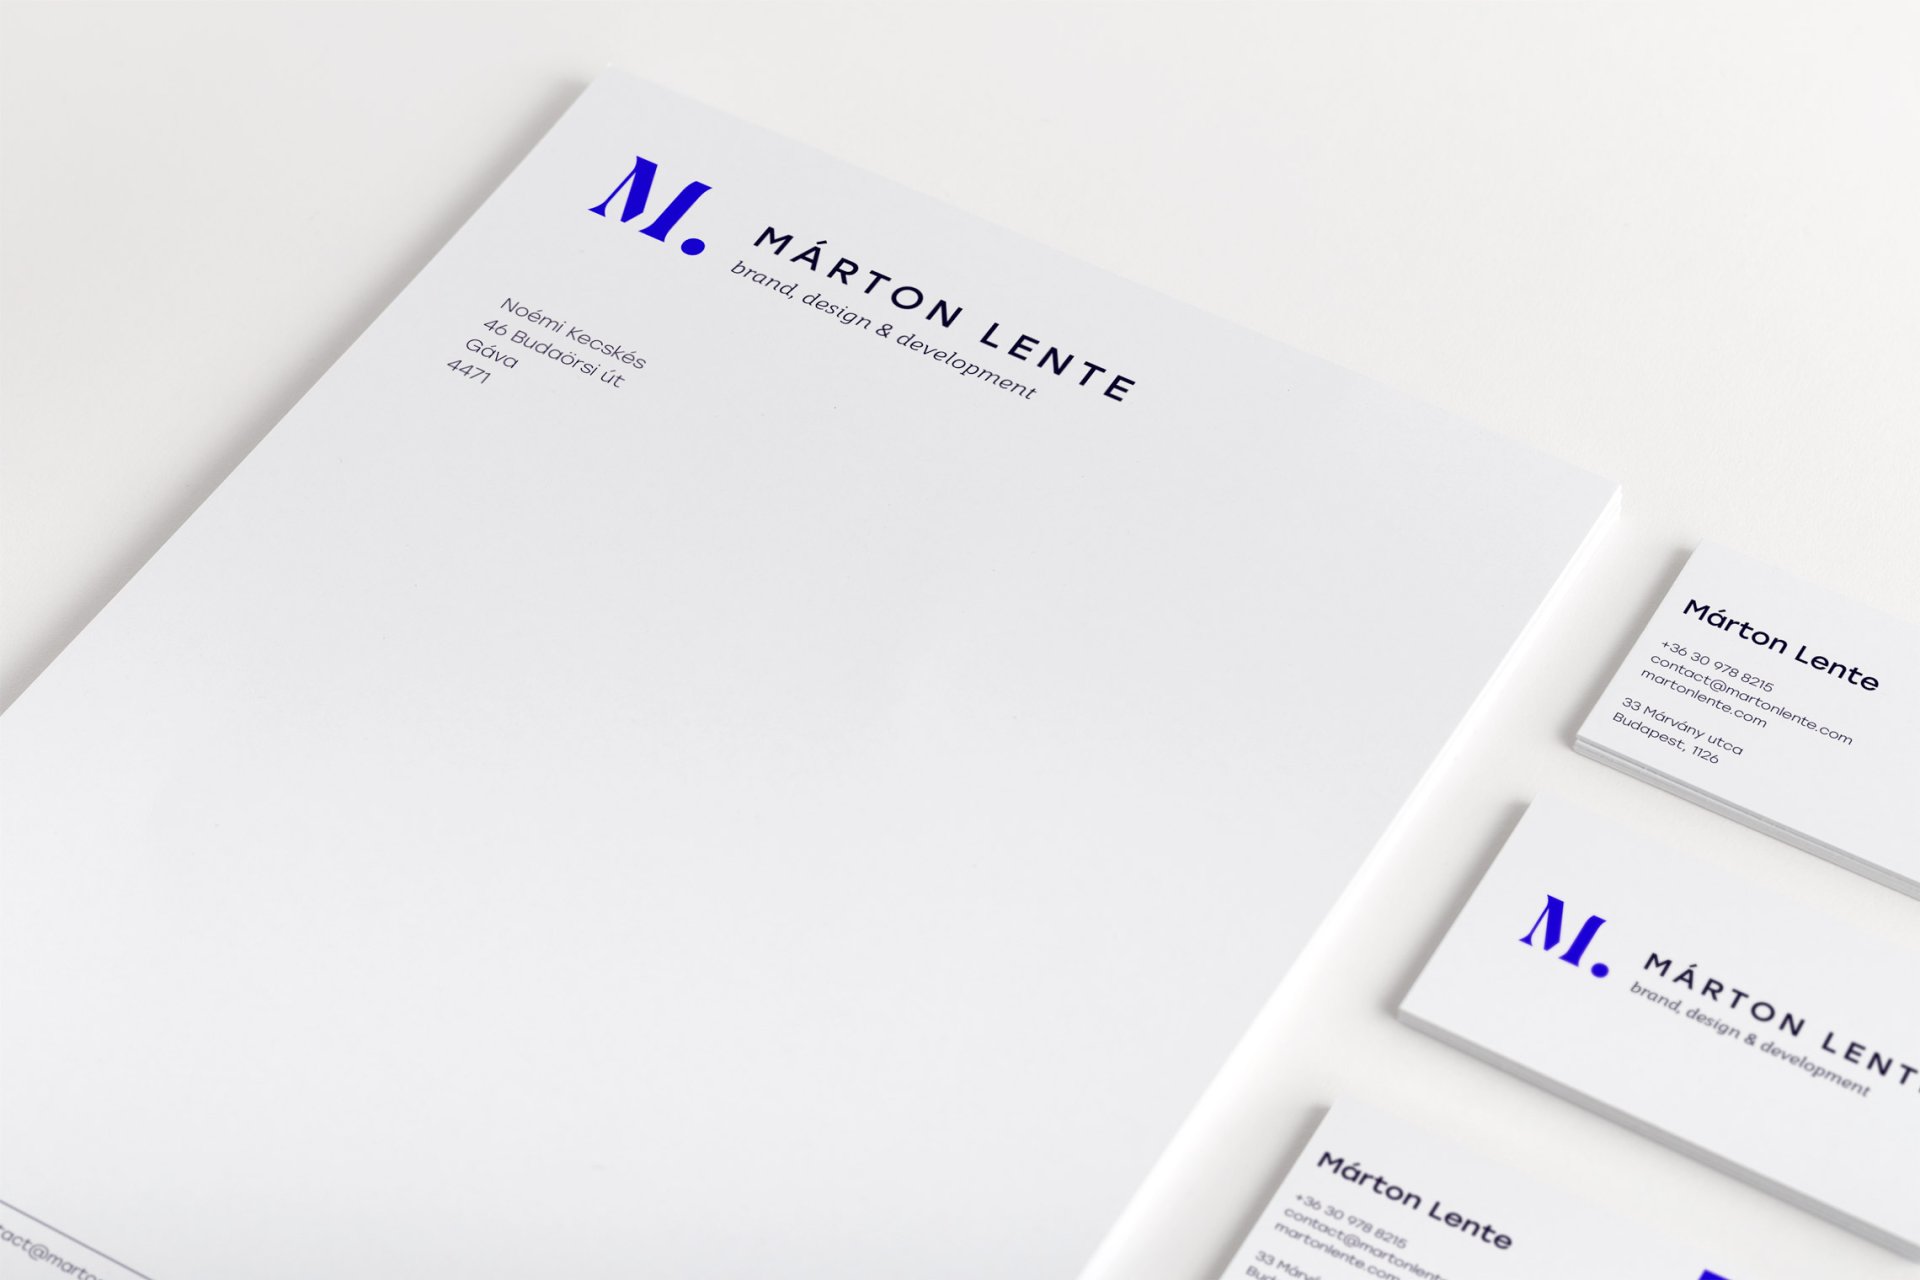 Márton Lente business card and letterhead stationery design